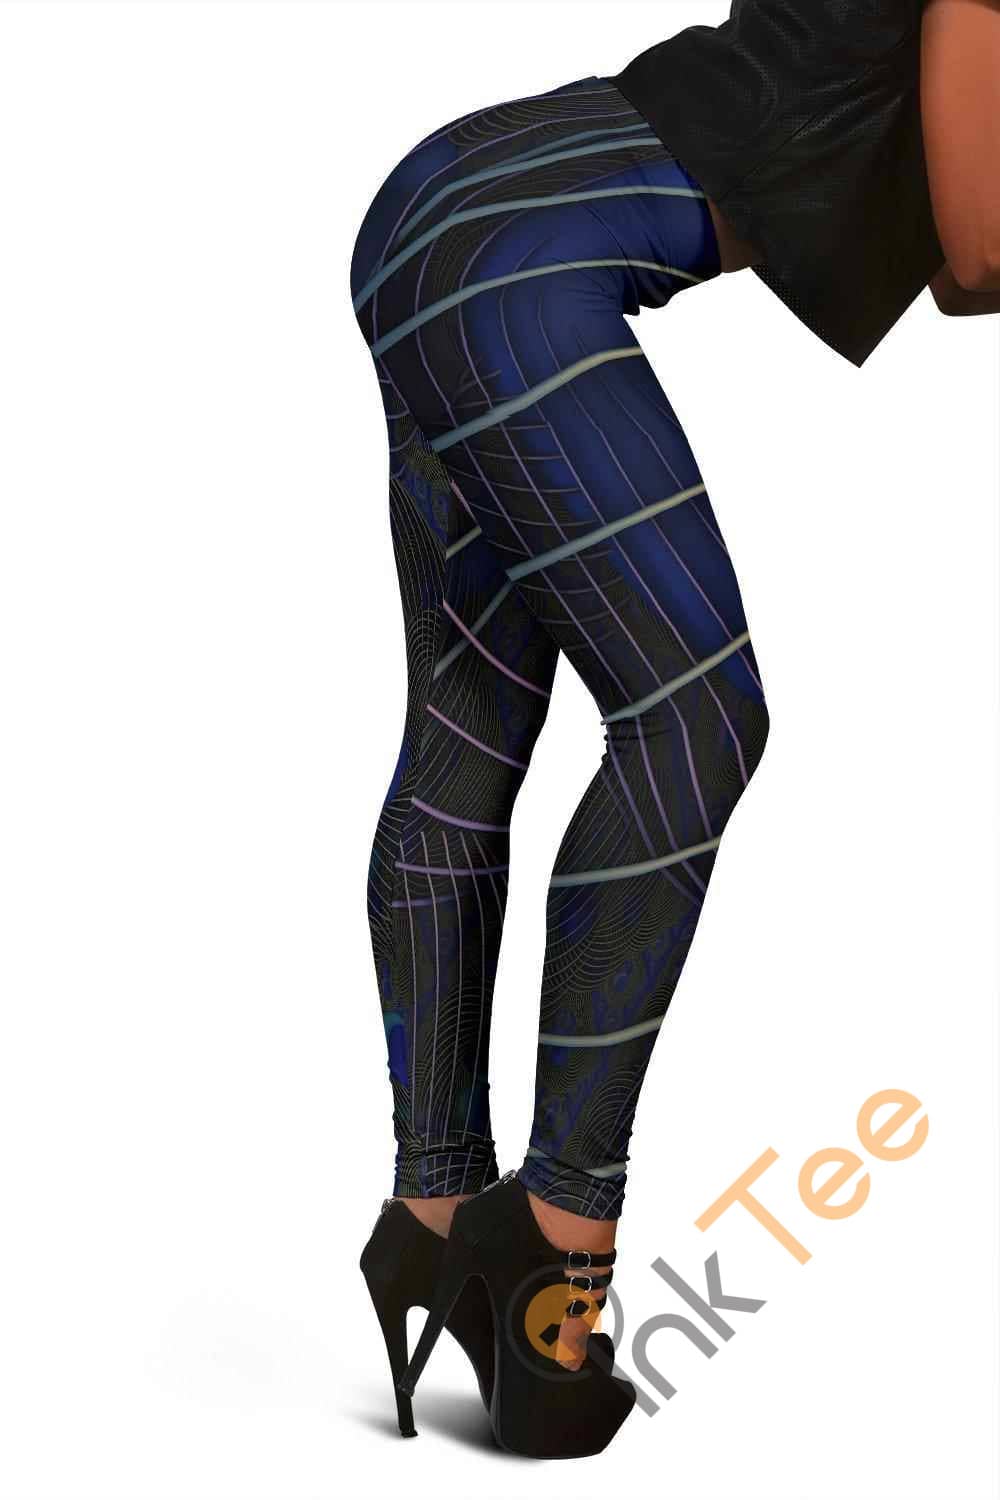 Inktee Store - Peacock 3D All Over Print For Yoga Fitness Women'S Leggings Image